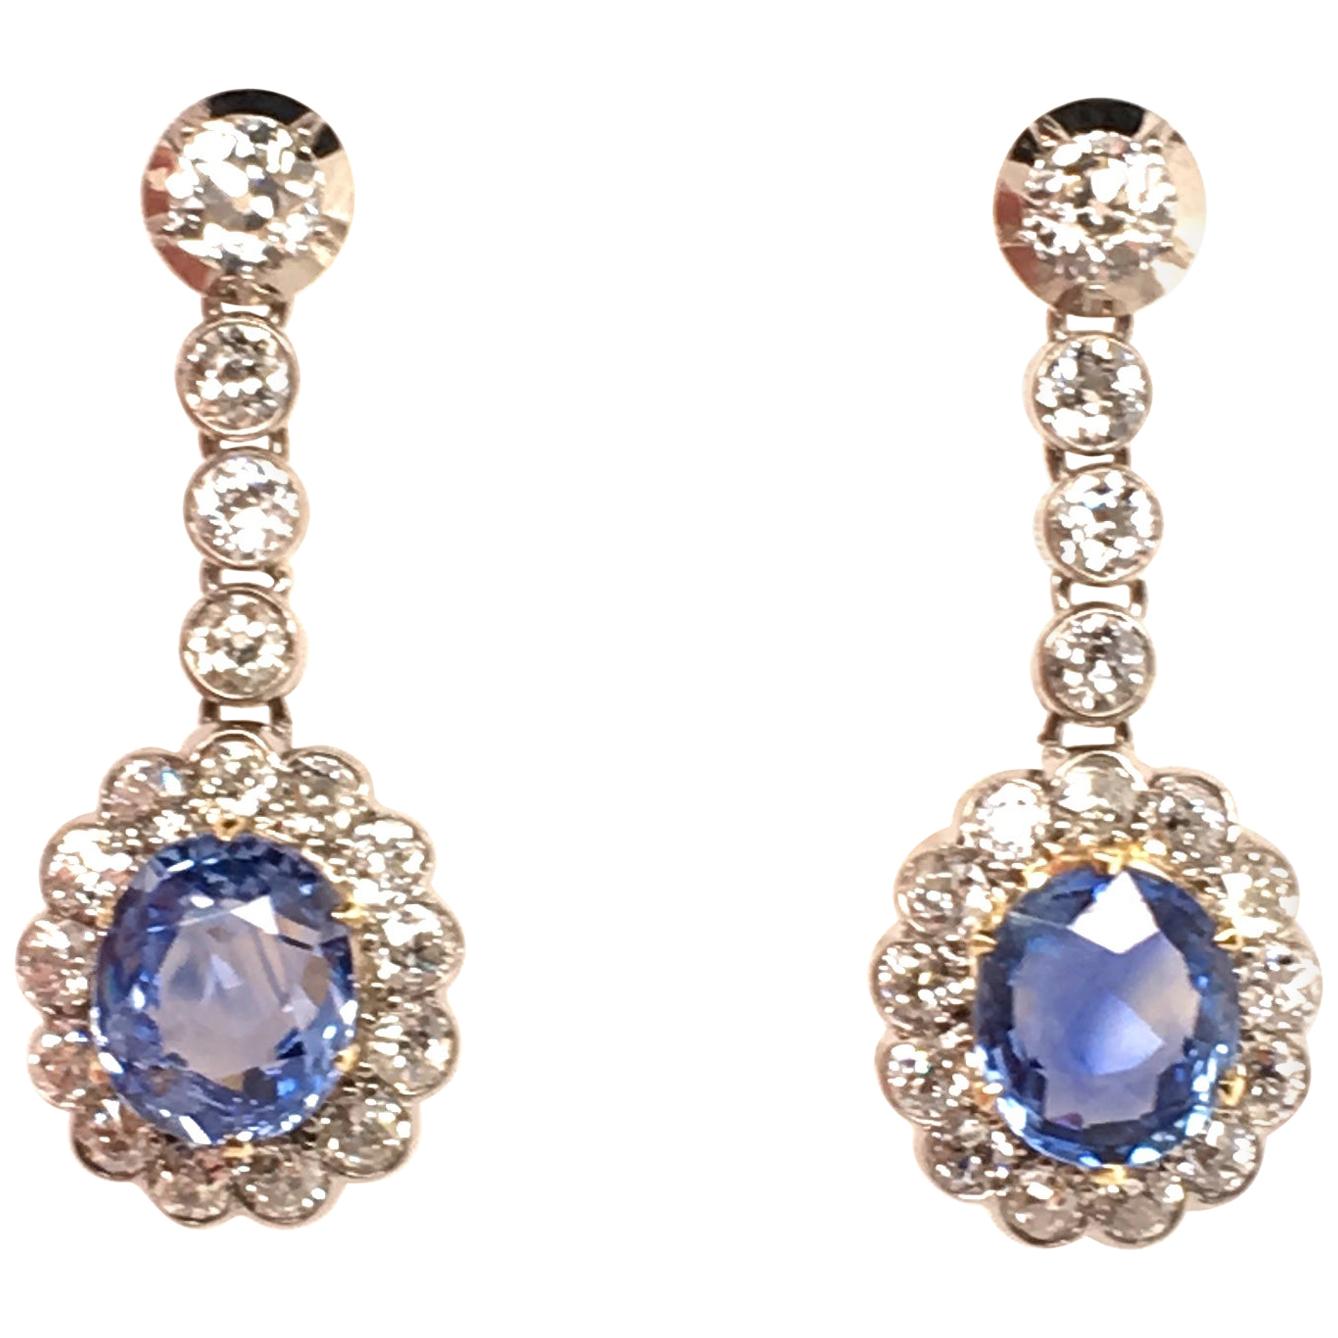 Paar antike Saphir- und Diamant-Ohrringe